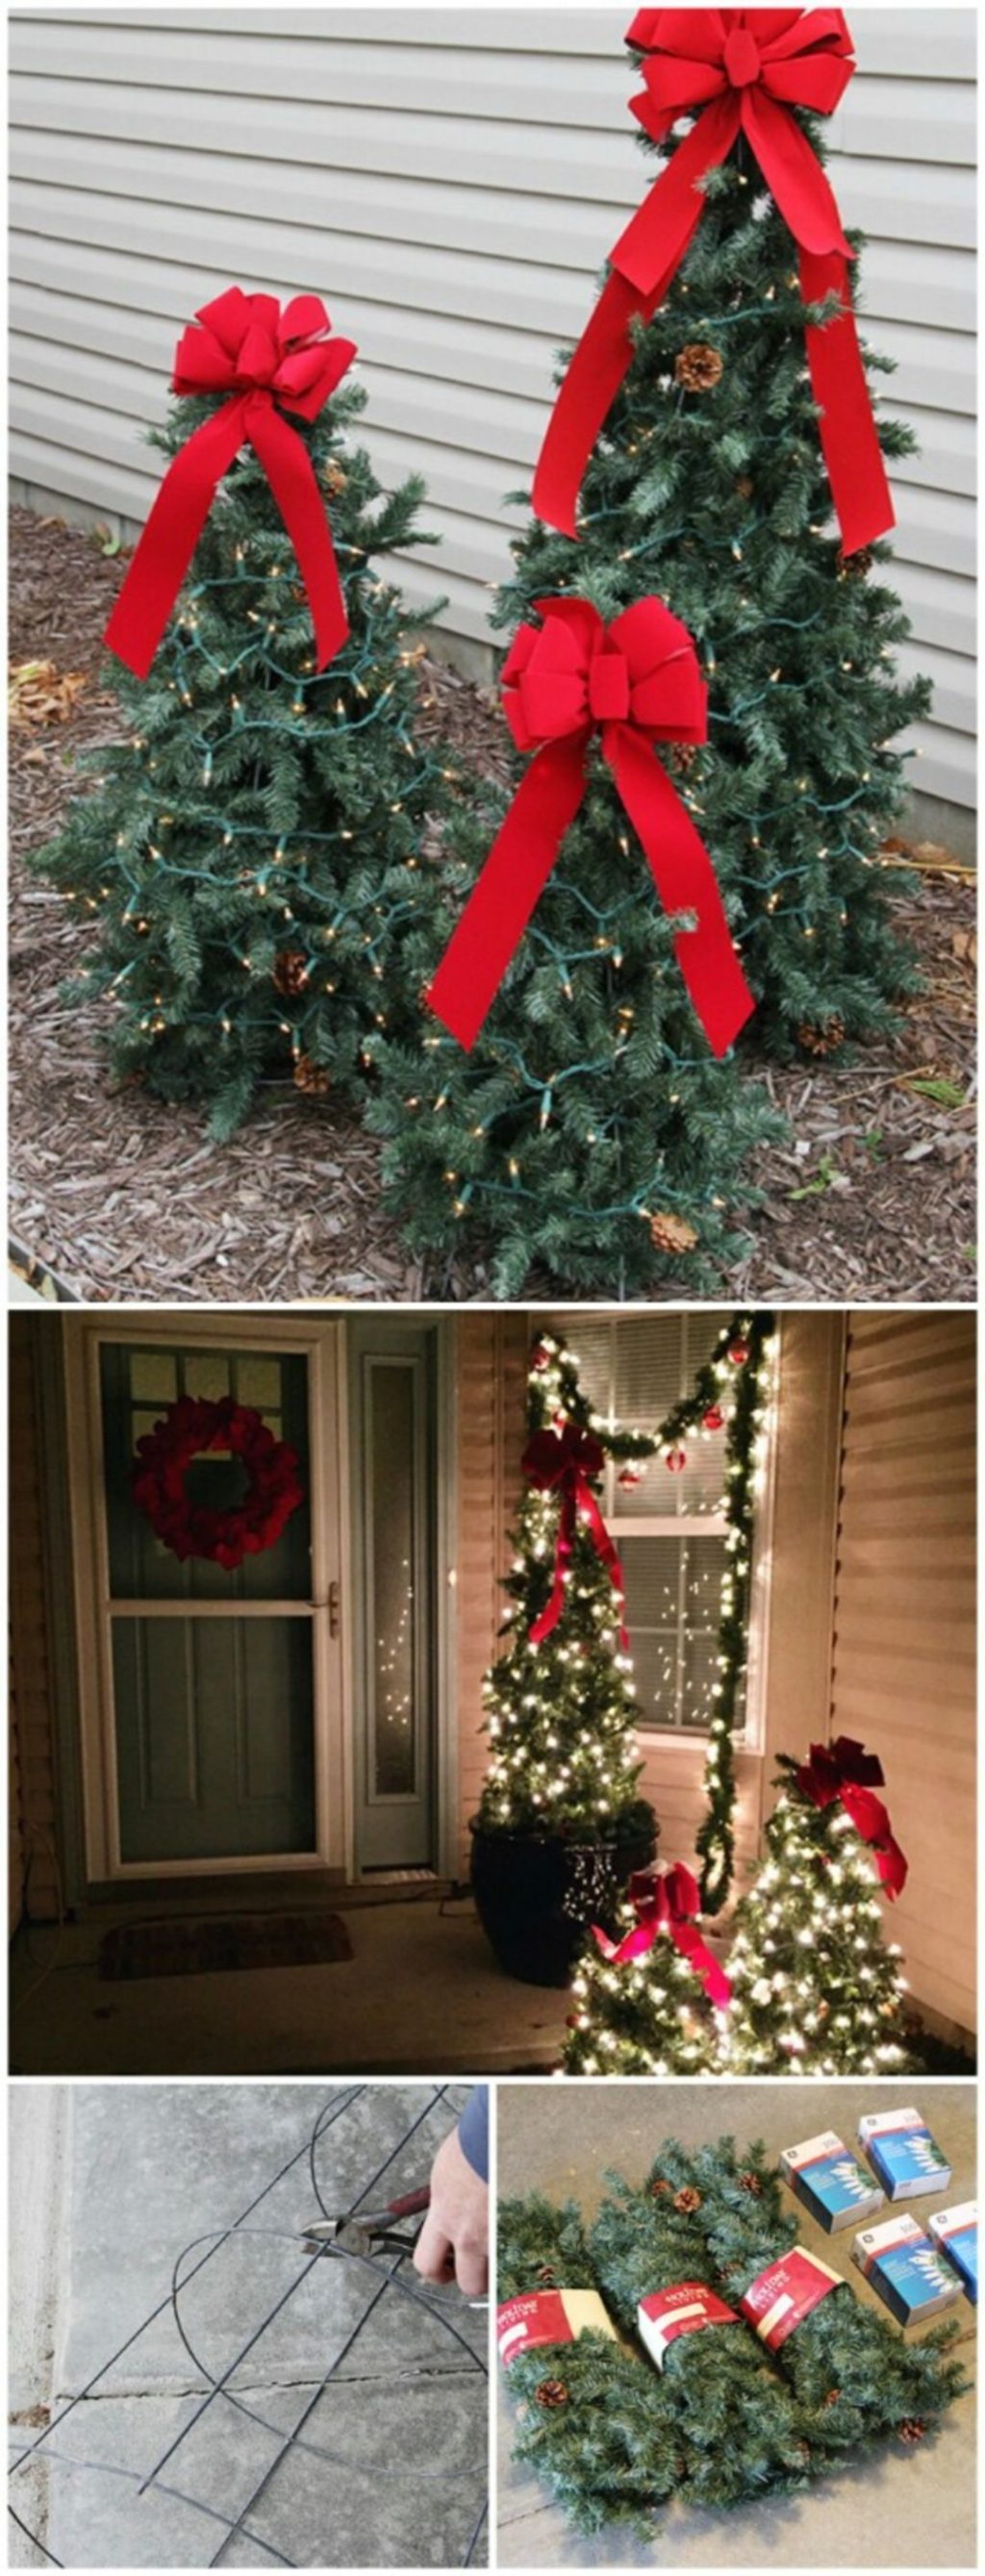 DIY-Christmas-lighting.-2-1024x2678 70+ Creative Christmas Decorations to Do in 2021